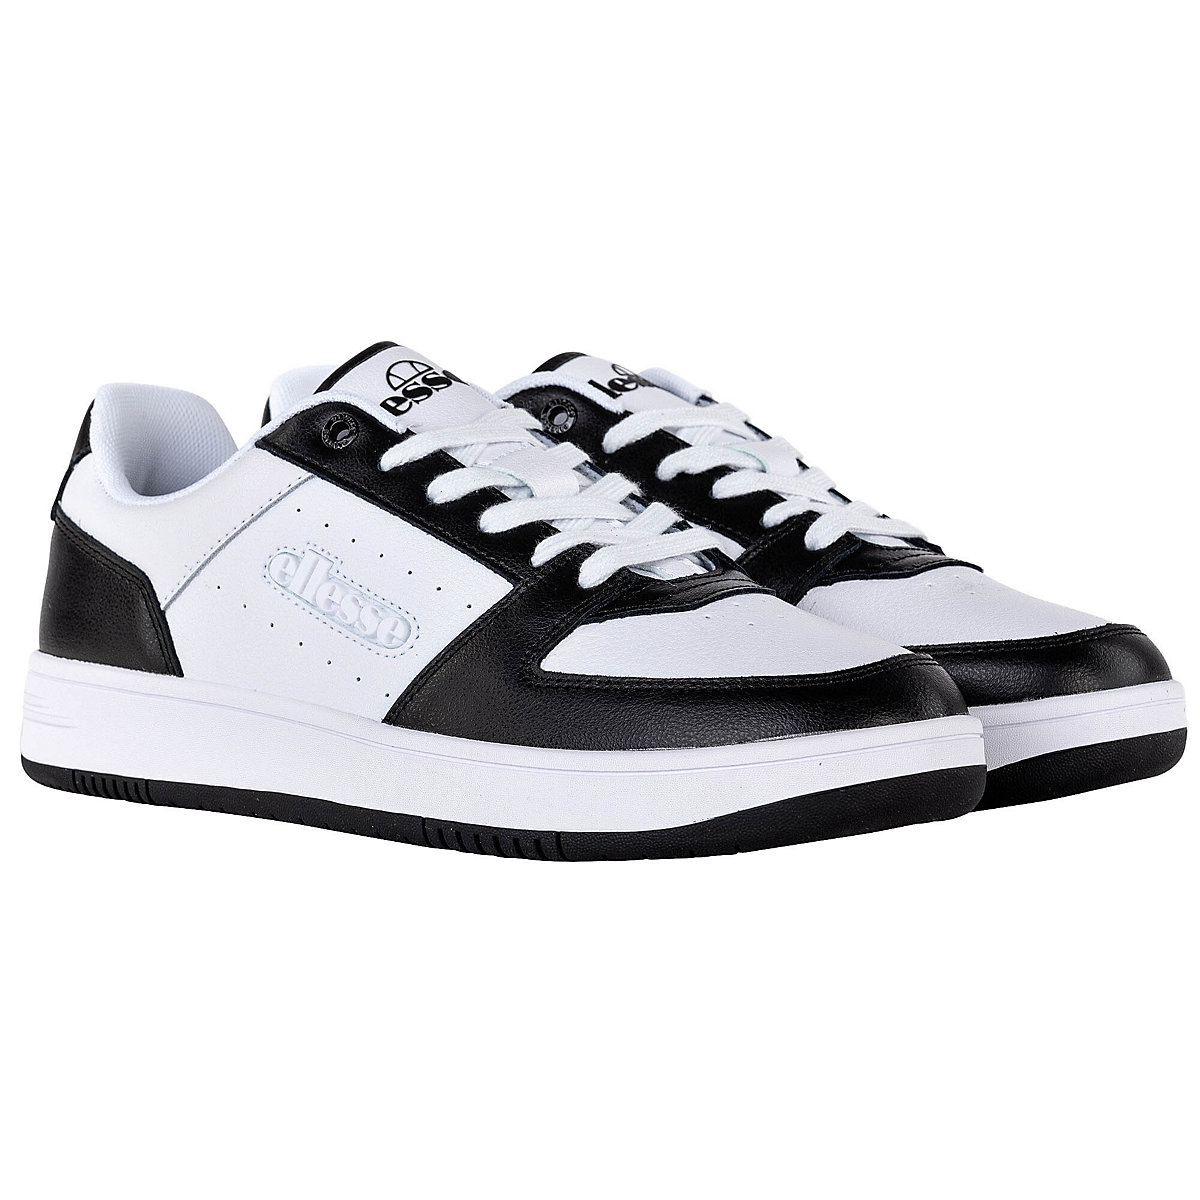 ellesse Herren Sneaker PANARO Turnschuh Leder Schnürung Logo Sneakers Low schwarz/weiß